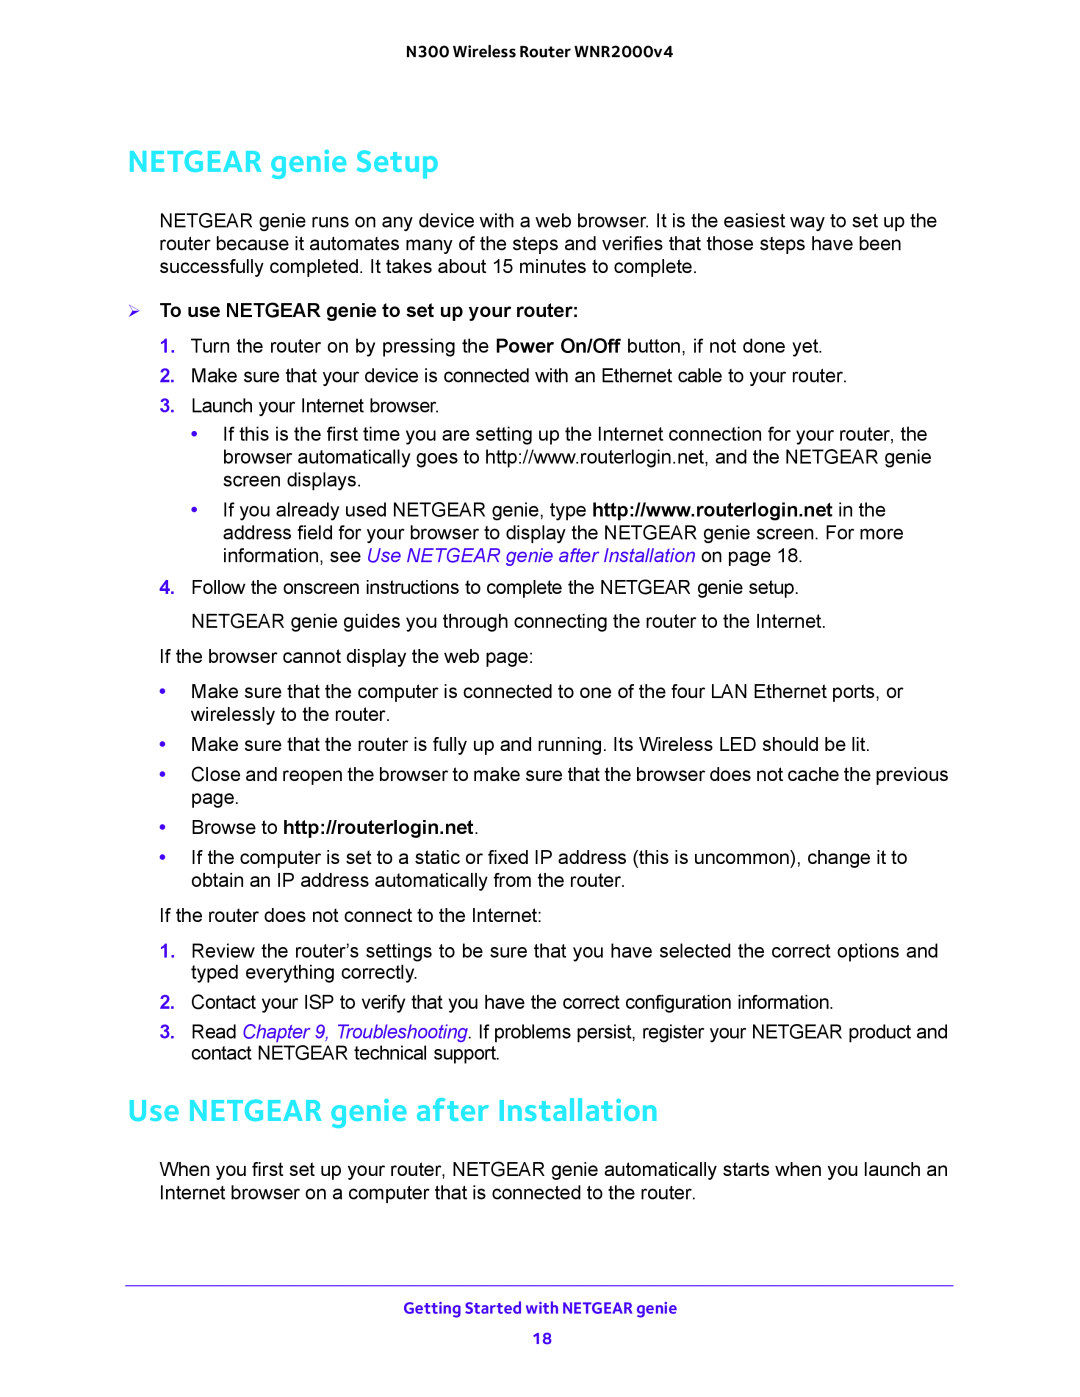 NETGEAR WNR2000 NETGEAR genie Setup, Use NETGEAR genie after Installation,  To use NETGEAR genie to set up your router 